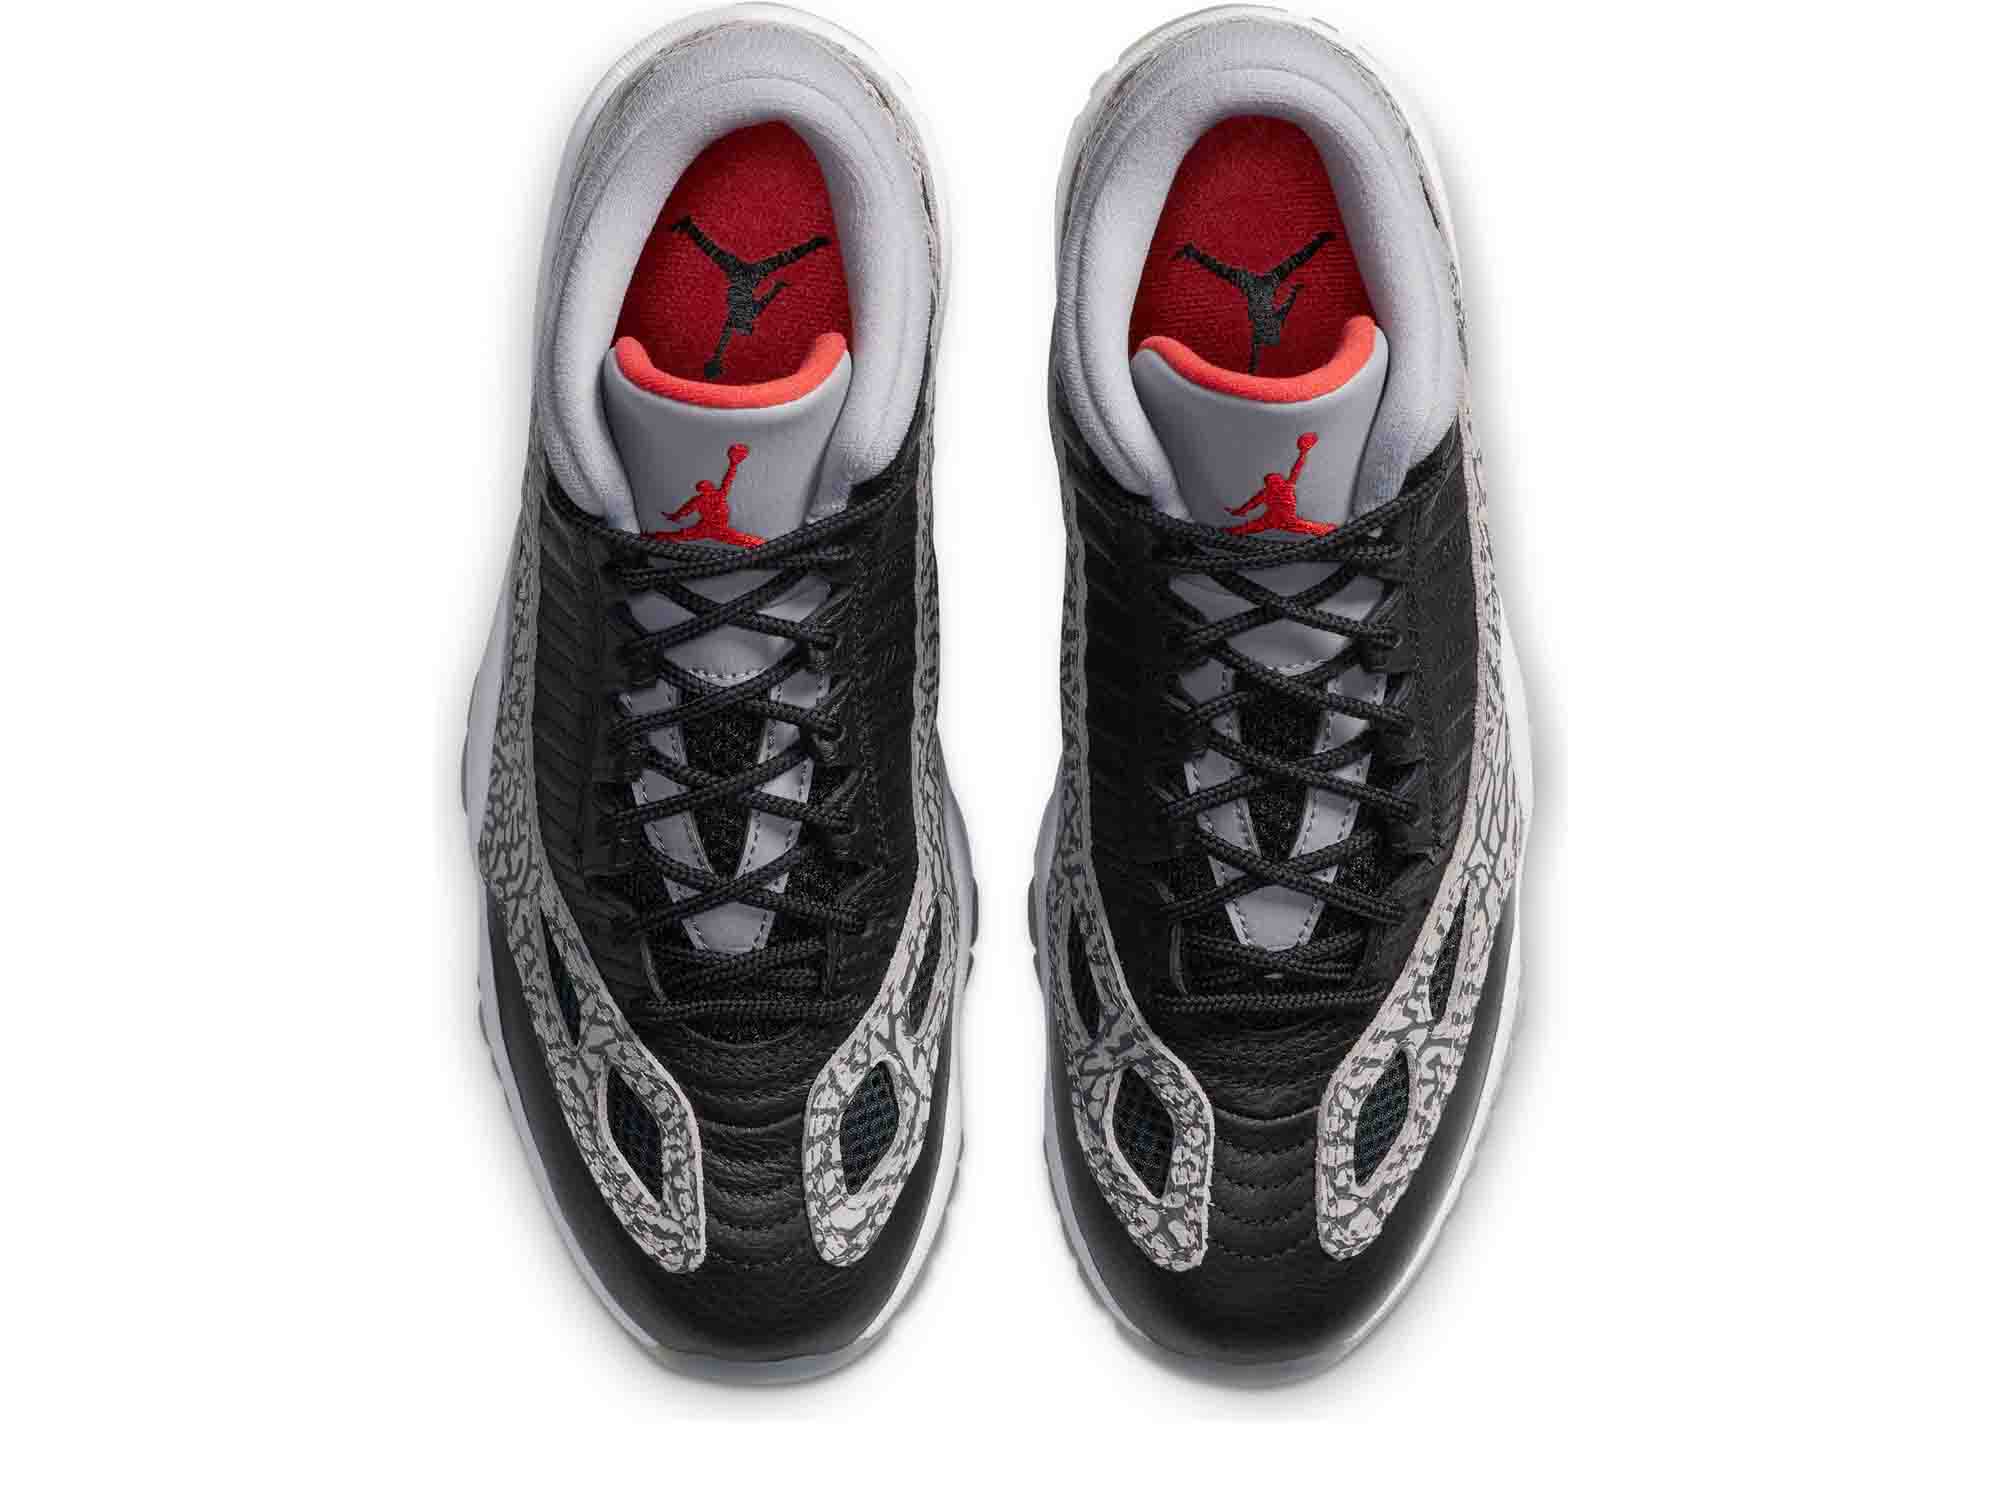 Air Jordan 11 Retro Low IE Herren Sneaker